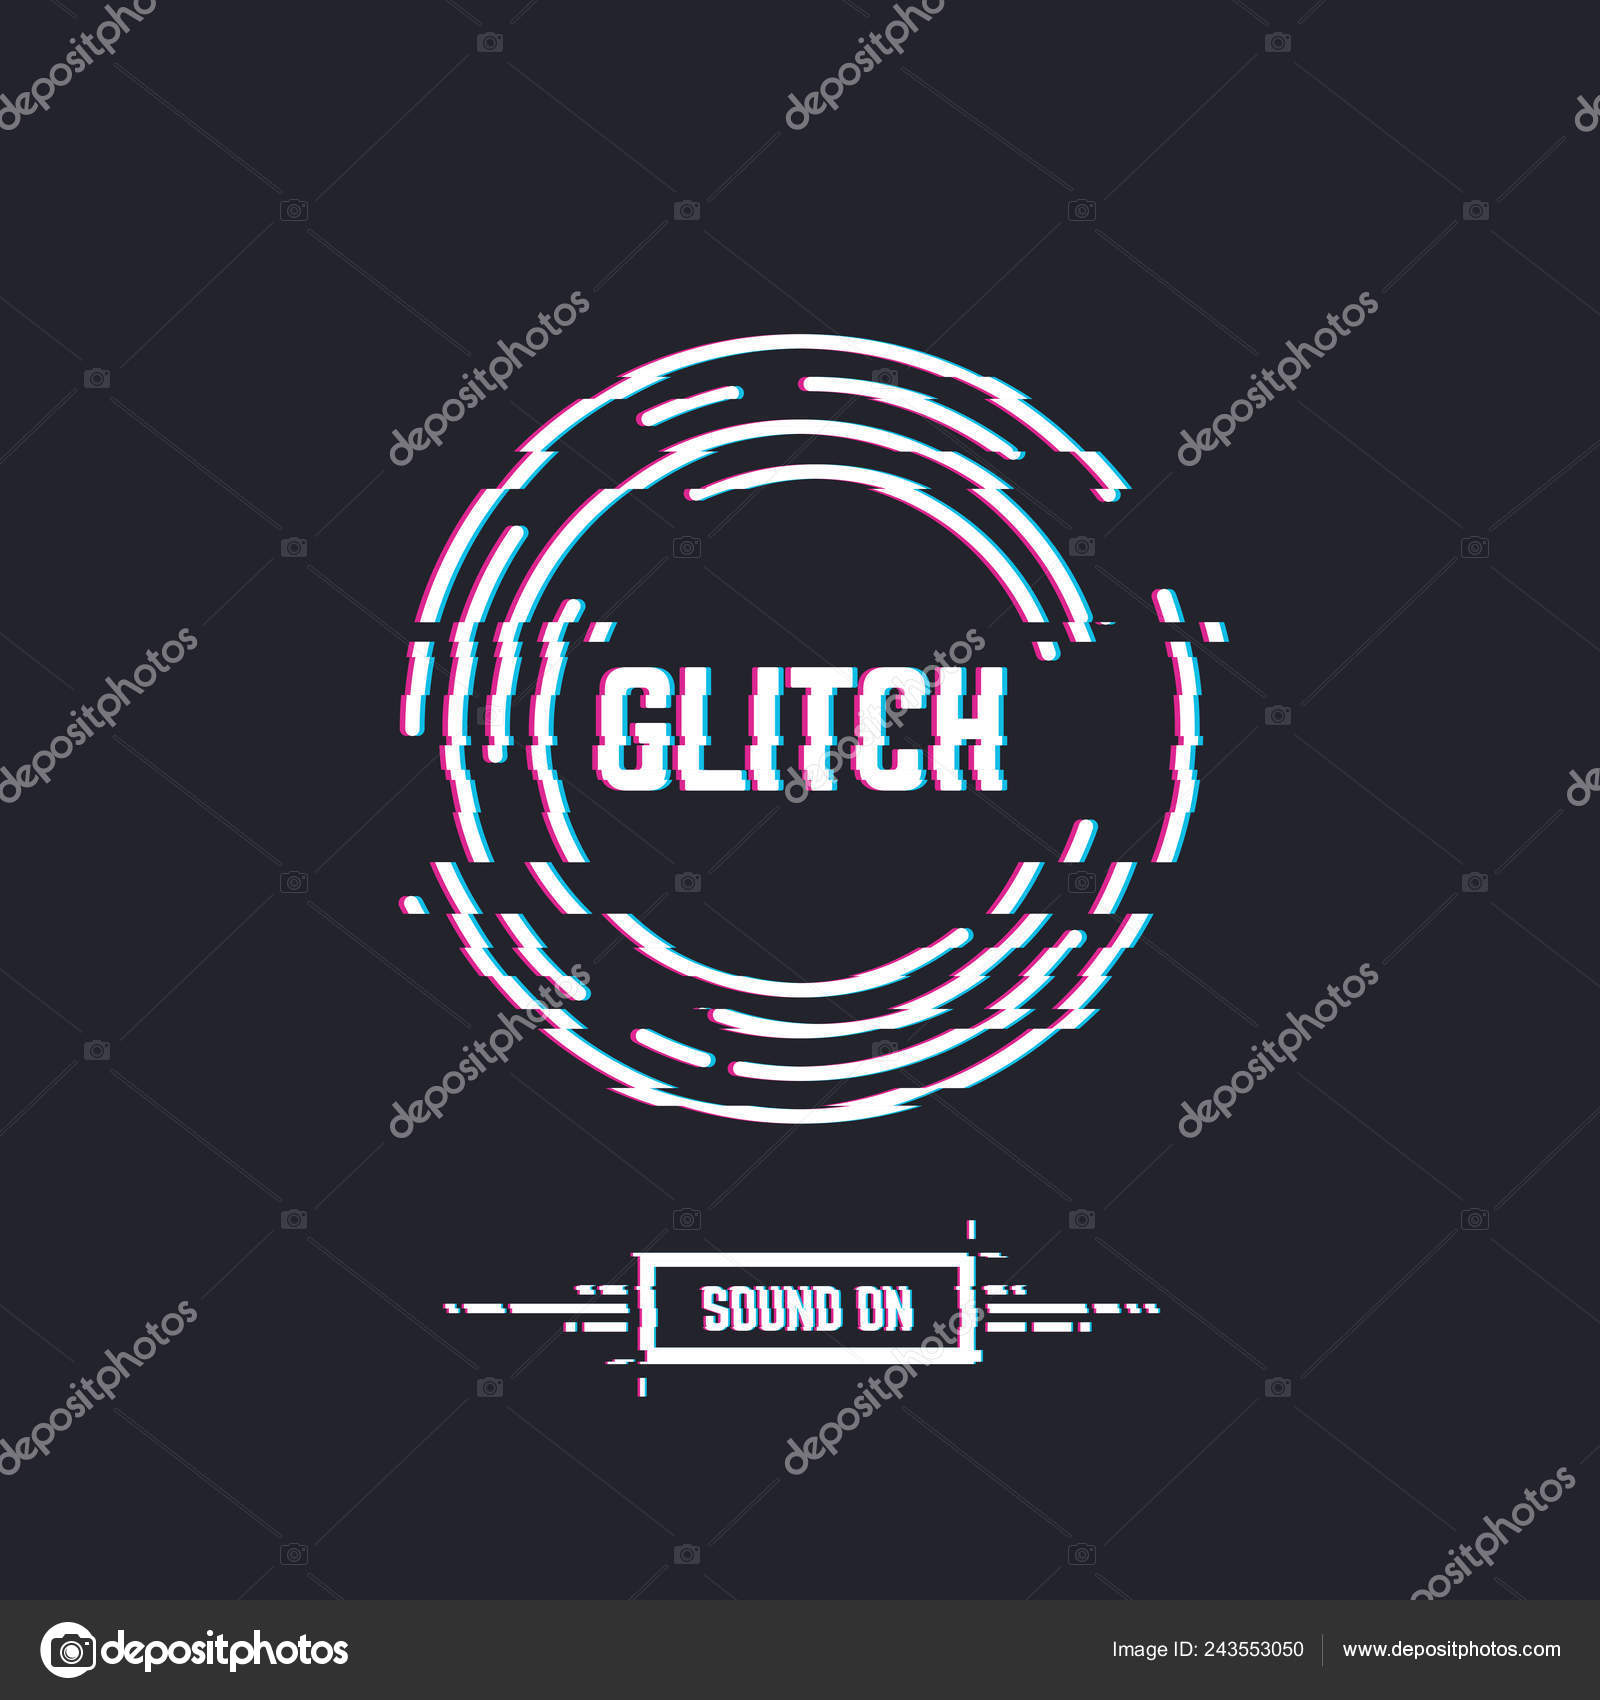 https://st4.depositphotos.com/1640243/24355/v/1600/depositphotos_243553050-stock-illustration-glitch-circles-text-stereo-effect.jpg